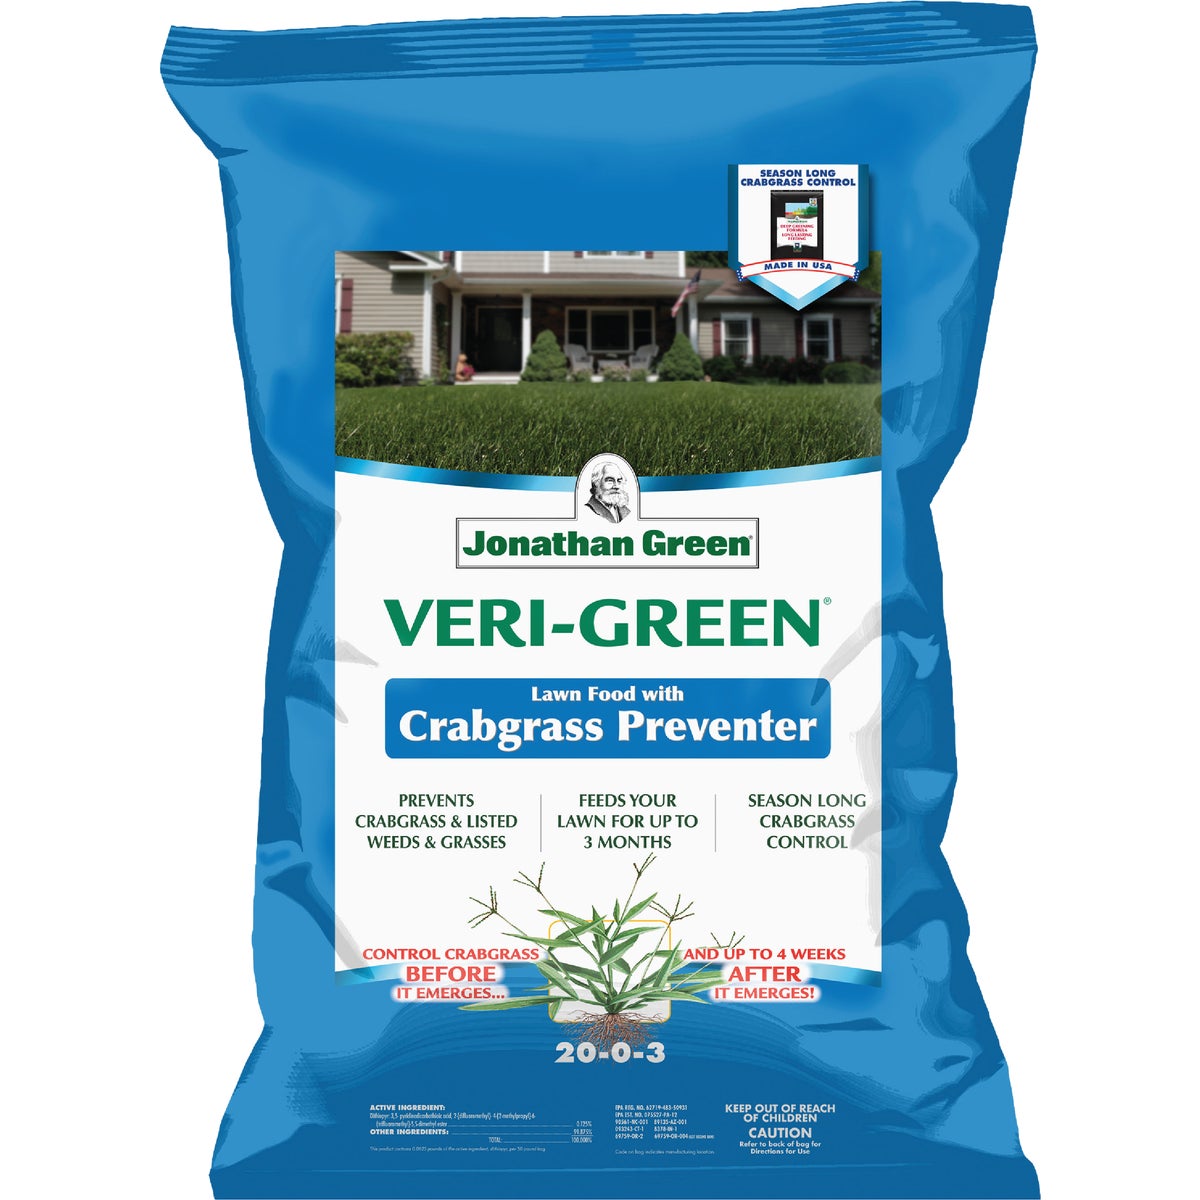 Jonathan Green Veri-Green 45 Lb. 15,000 Sq. Ft. 22-0-3 Lawn Fertilizer with Crabgrass Preventer